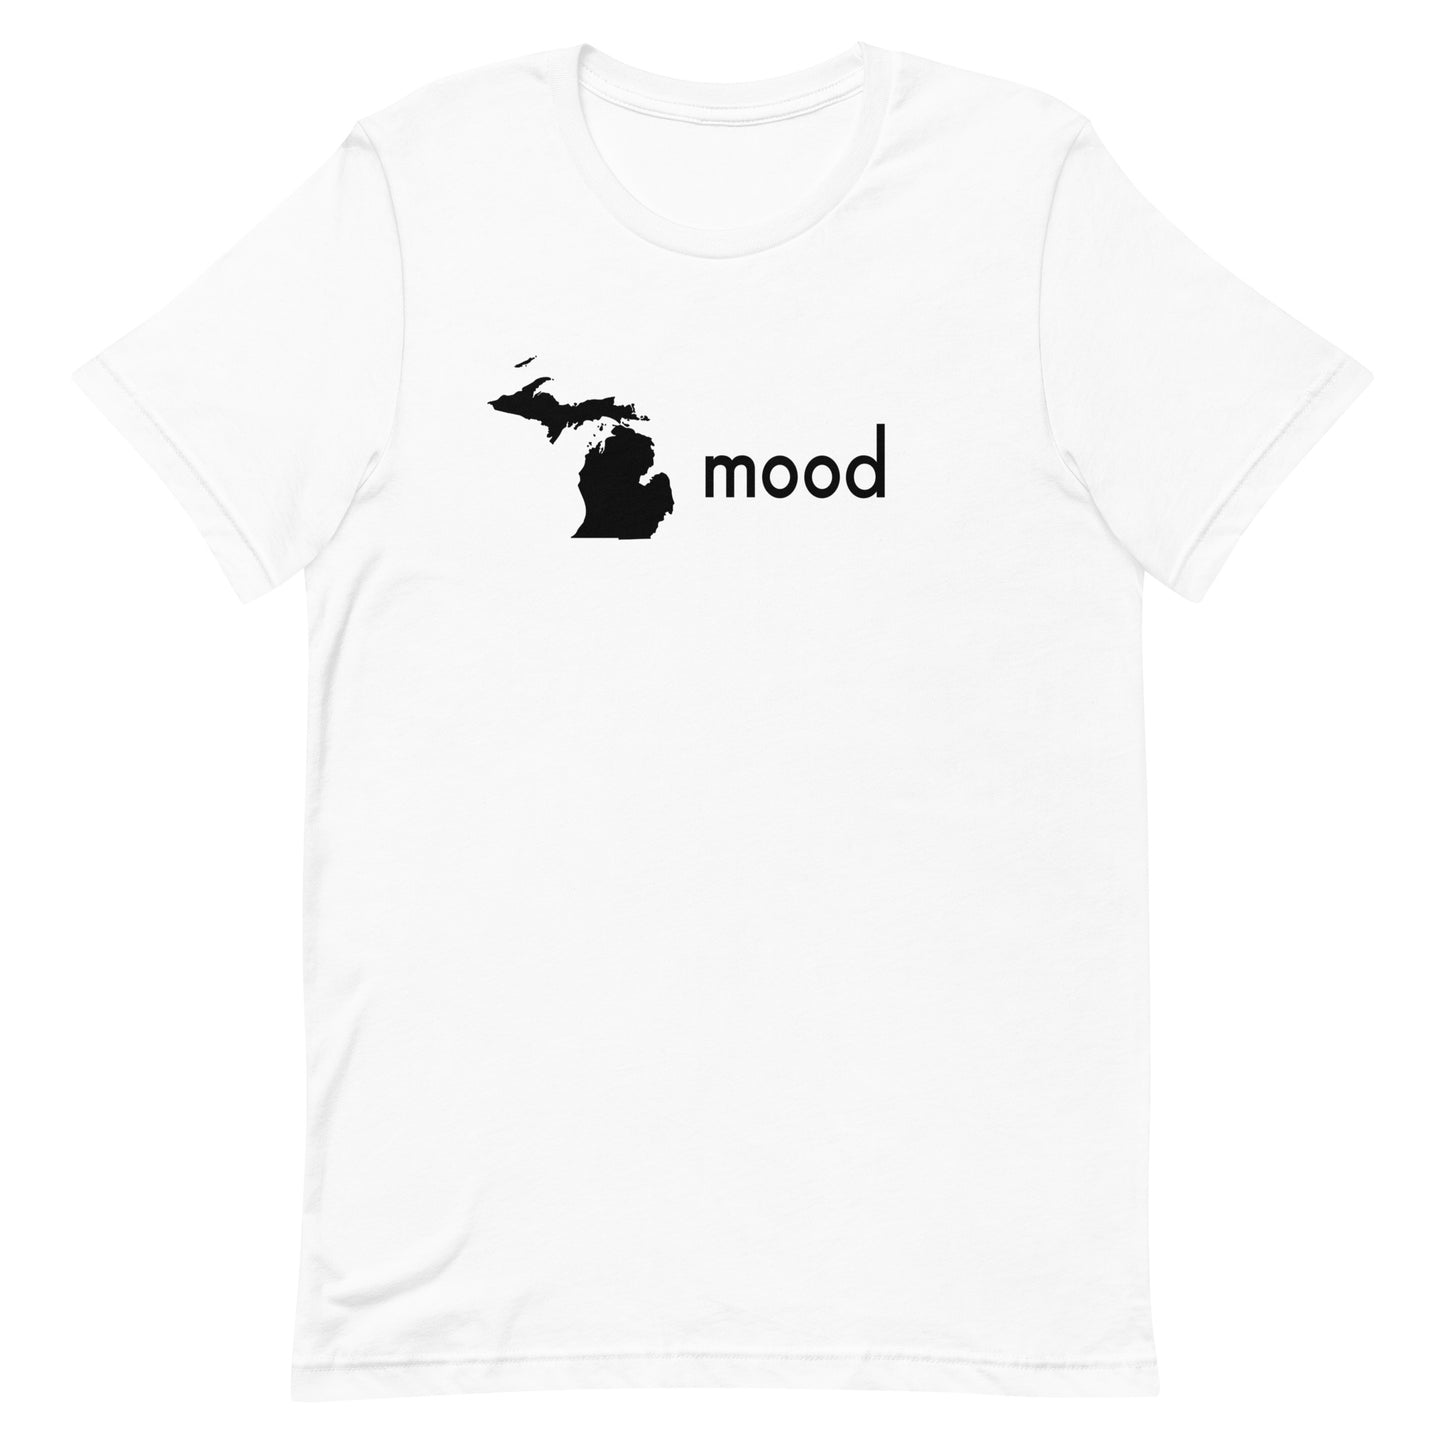 michigan mood cotton t-shirt